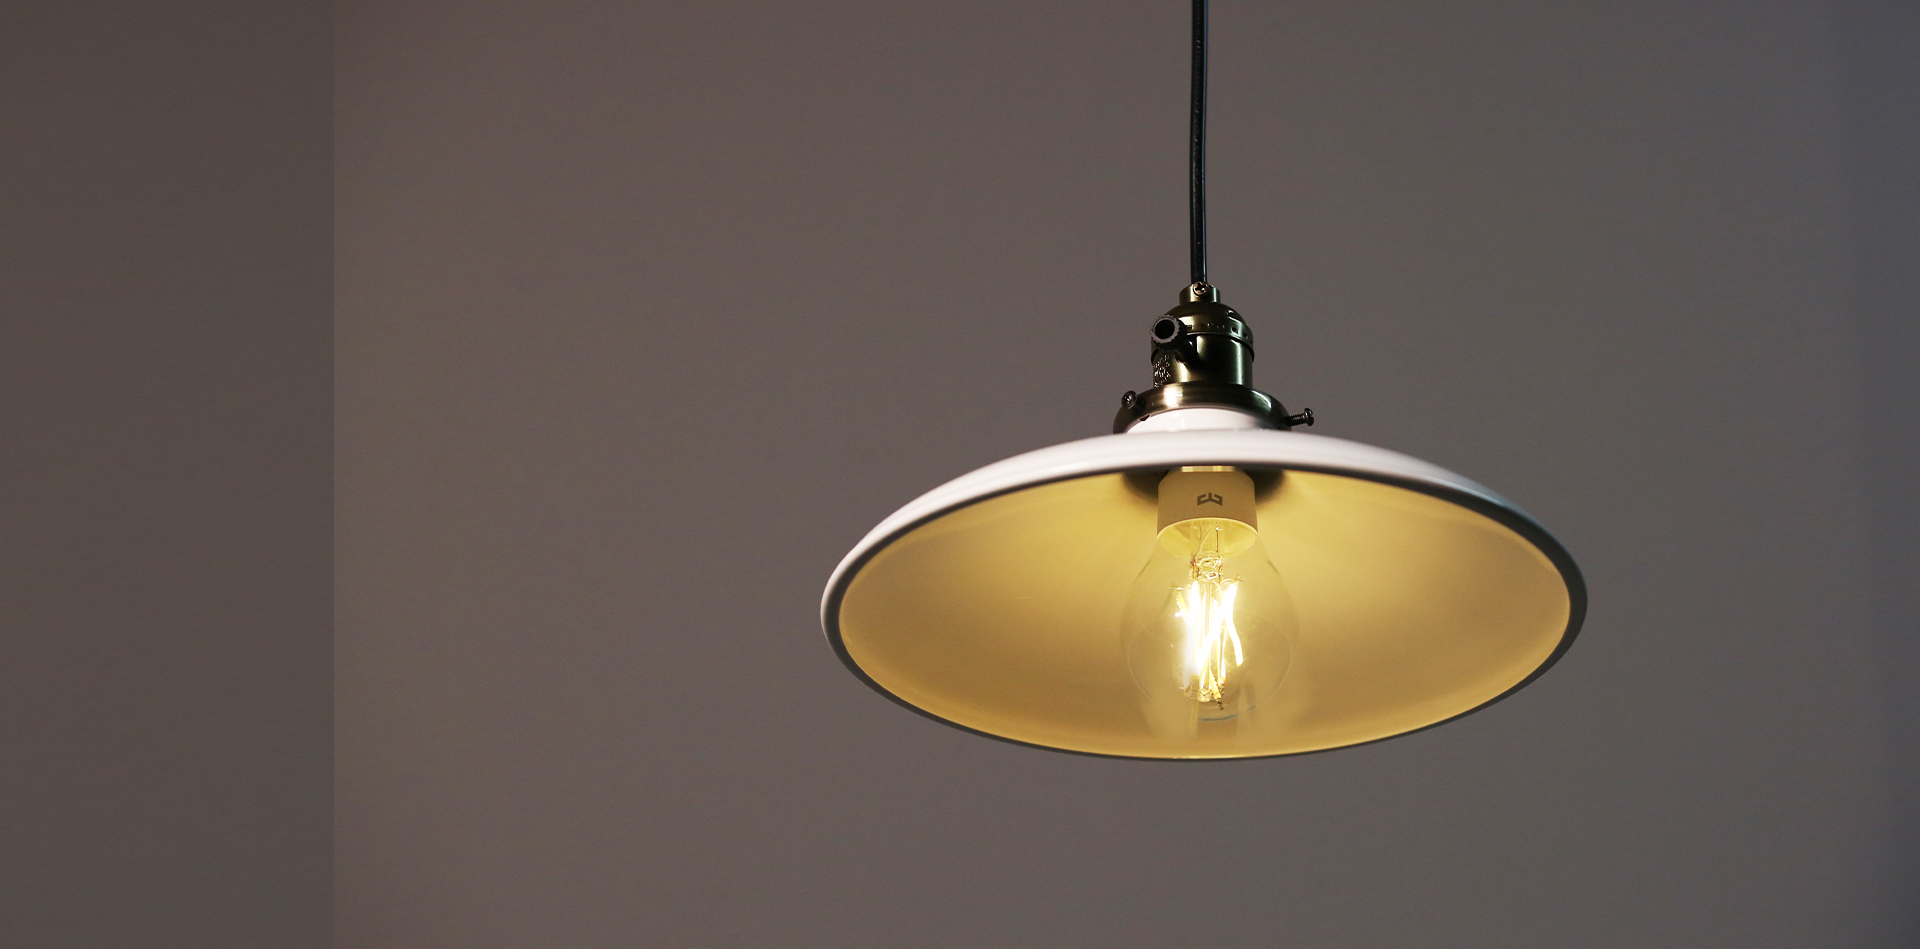 Gutes Licht mit geringem Energieverbrauch » Smart LED Filament Lampe